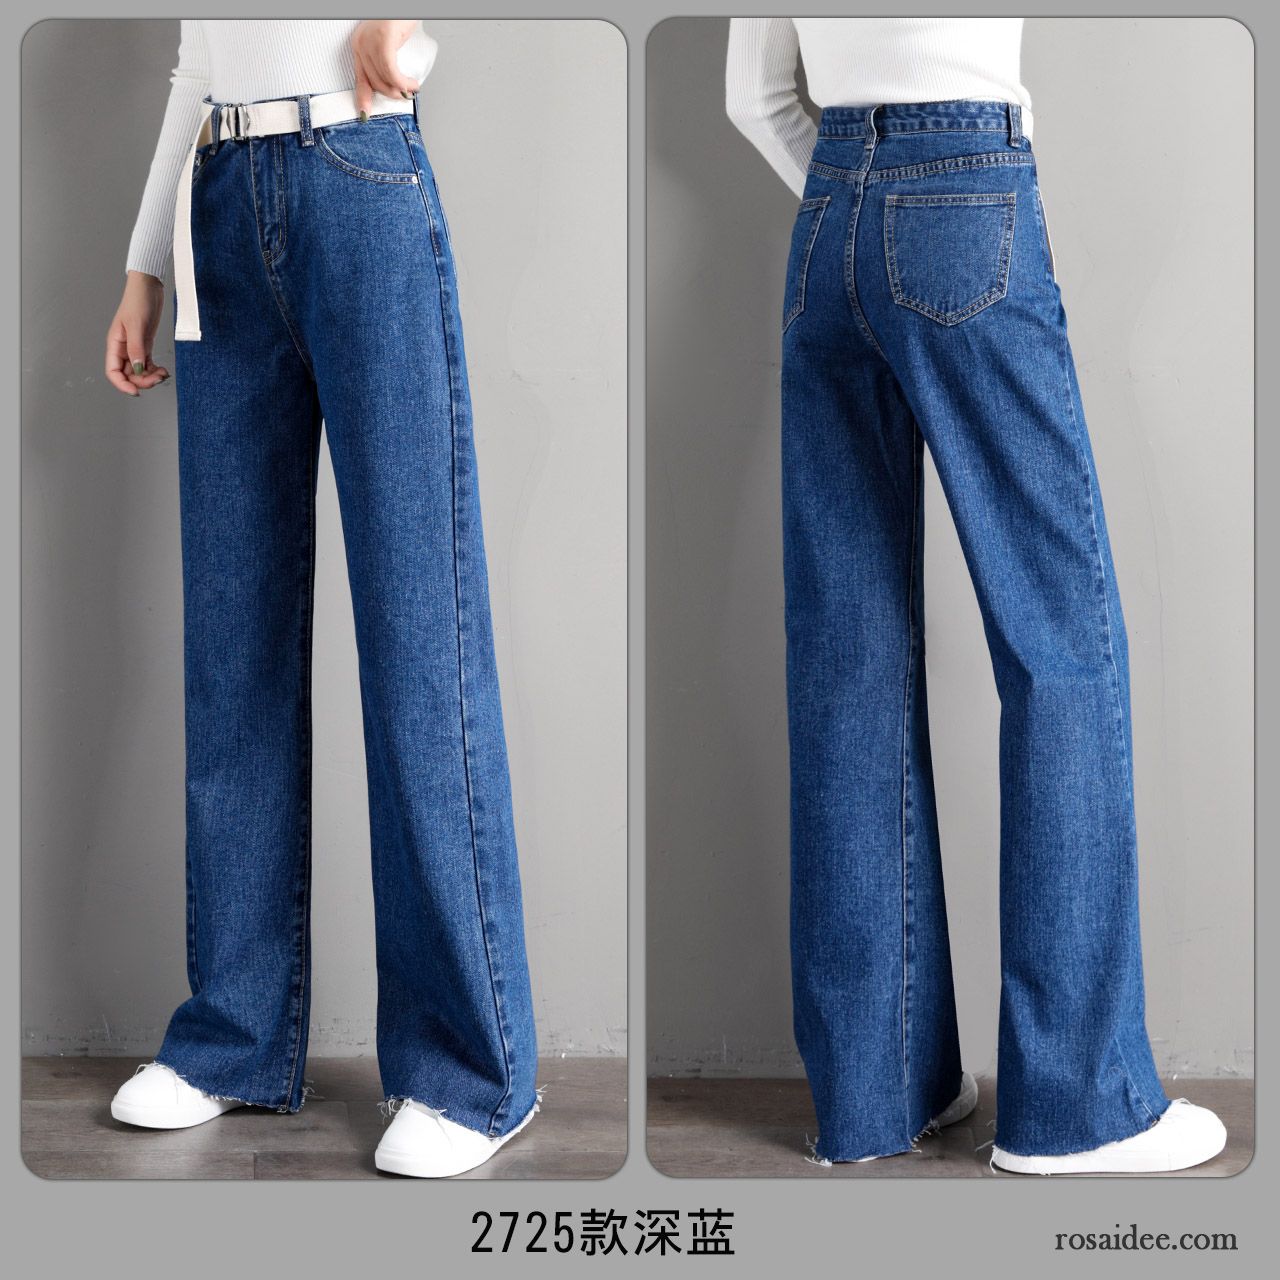 Jeans Damen Lose Hose Hohe Taille Neu Gerade Trend Blau